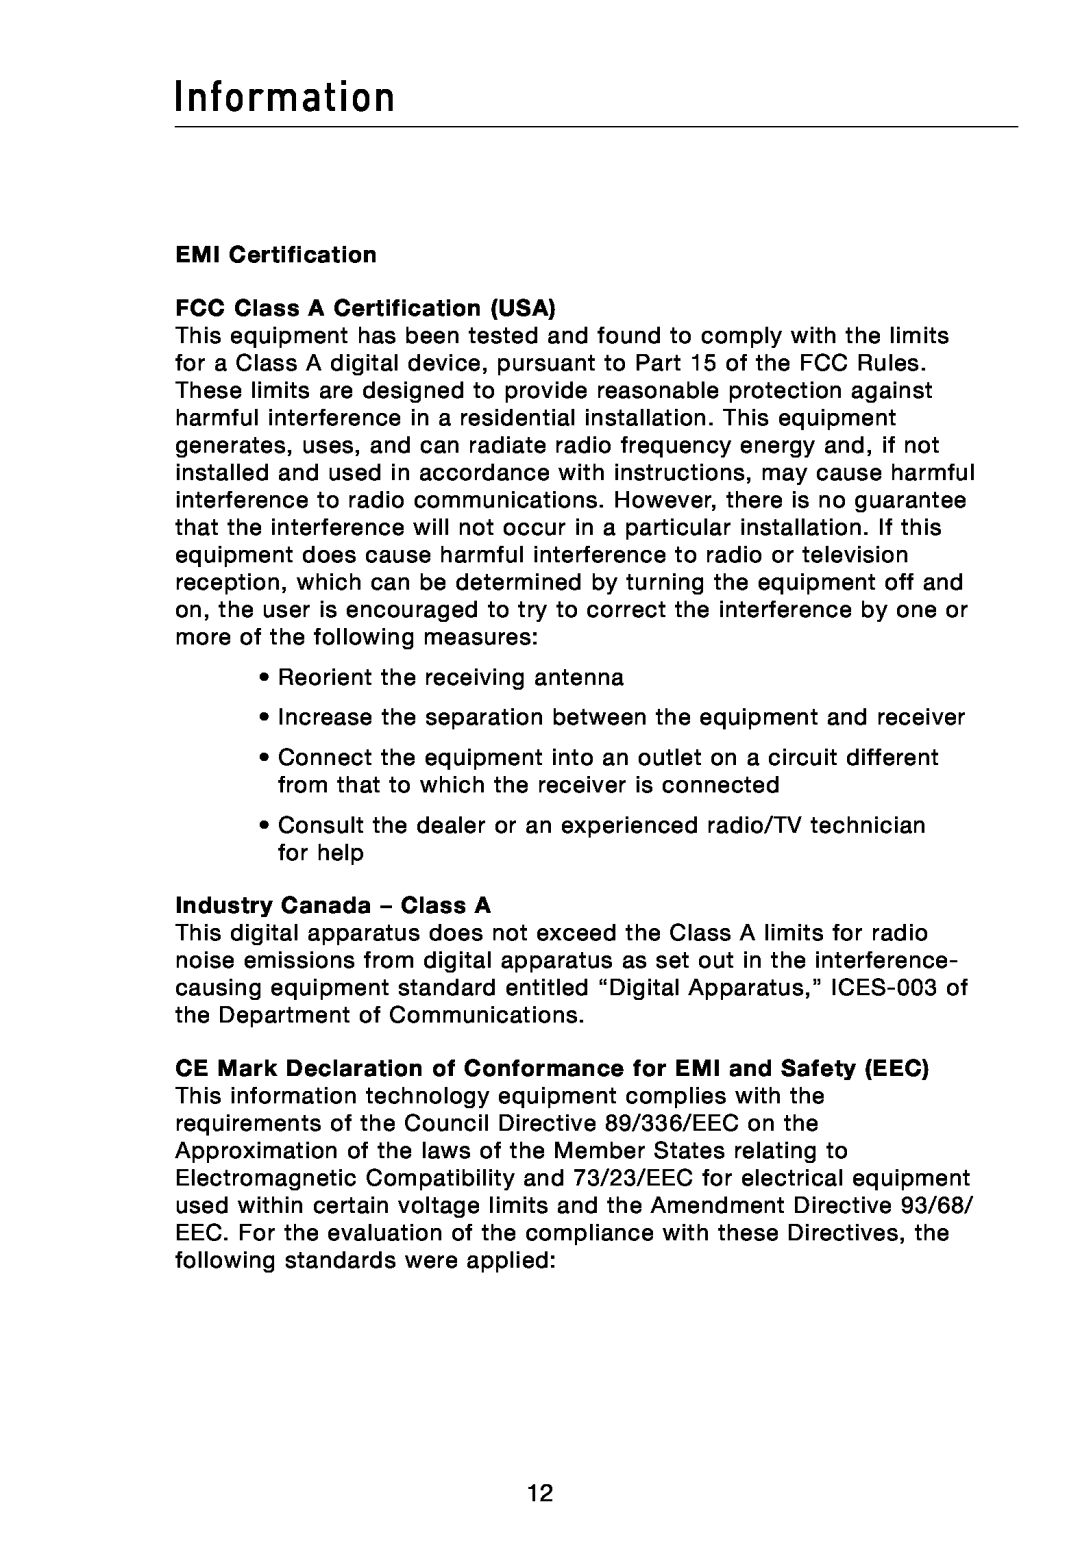 Belkin F5D5141-24, F5D5141-16 manual Information, EMI Certification FCC Class A Certification USA, Industry Canada - Class A 